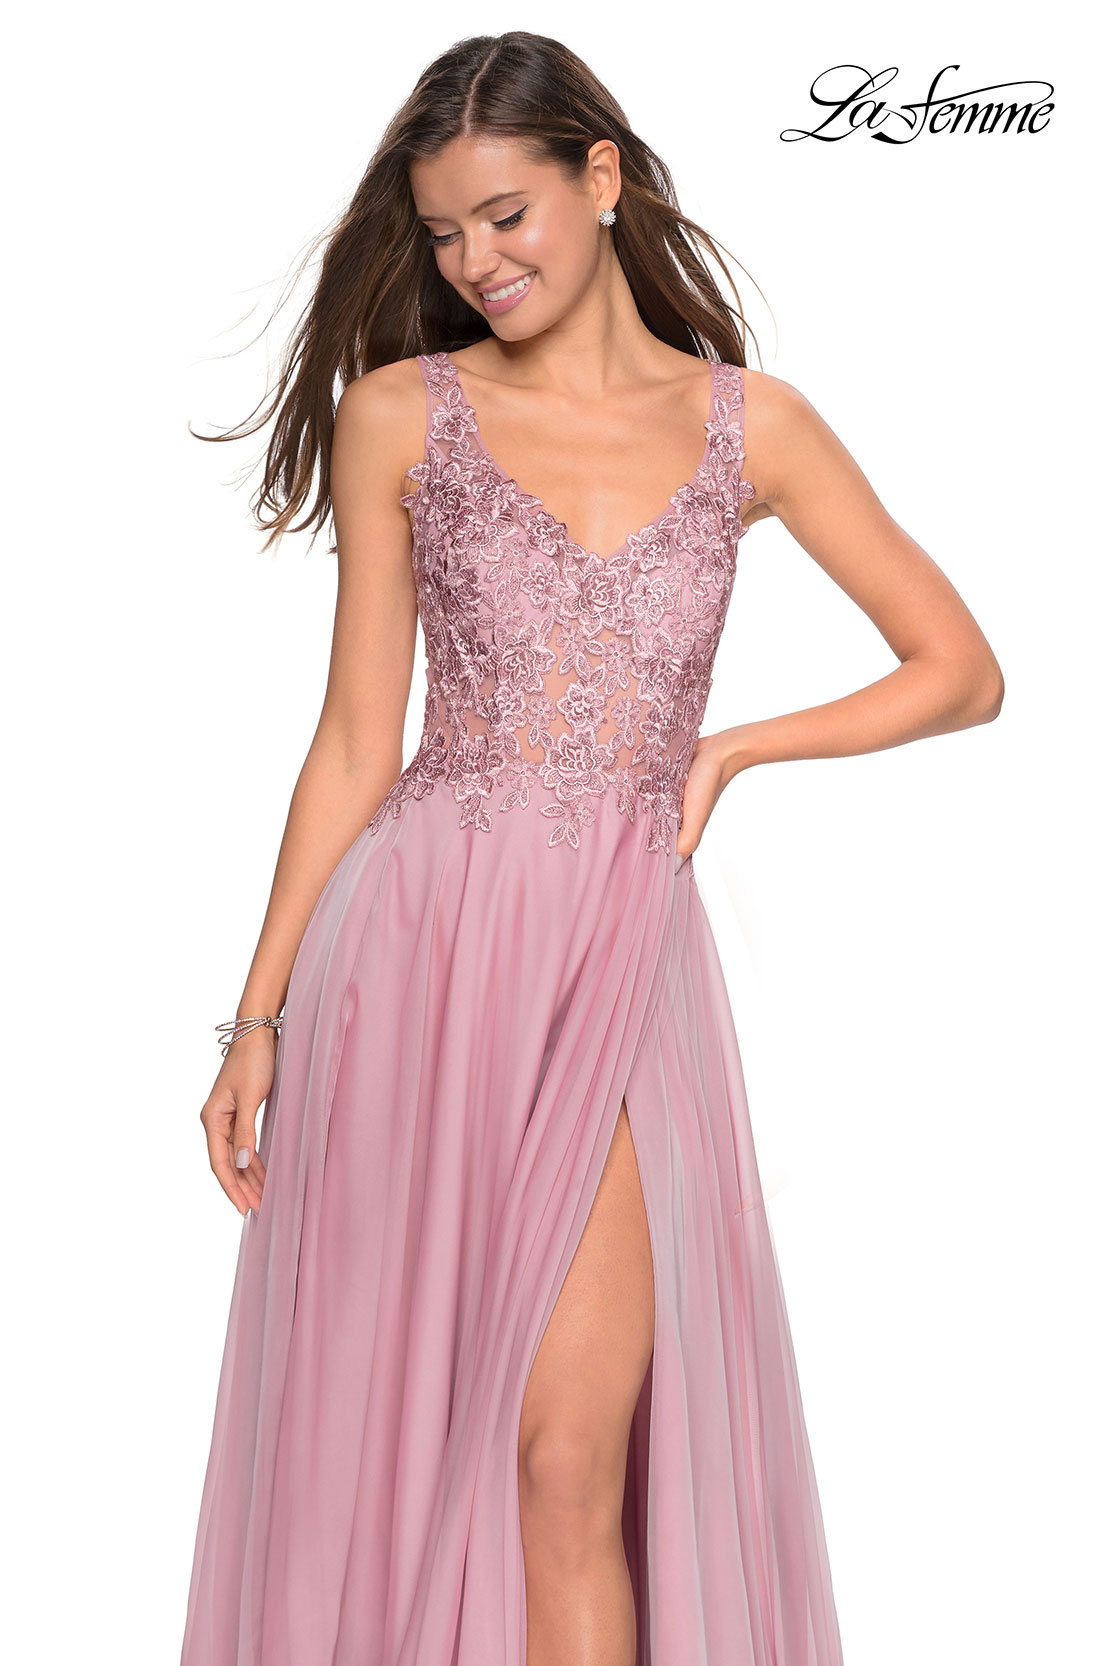 Mauve chiffon prom dress with lace top by La Femme 27751